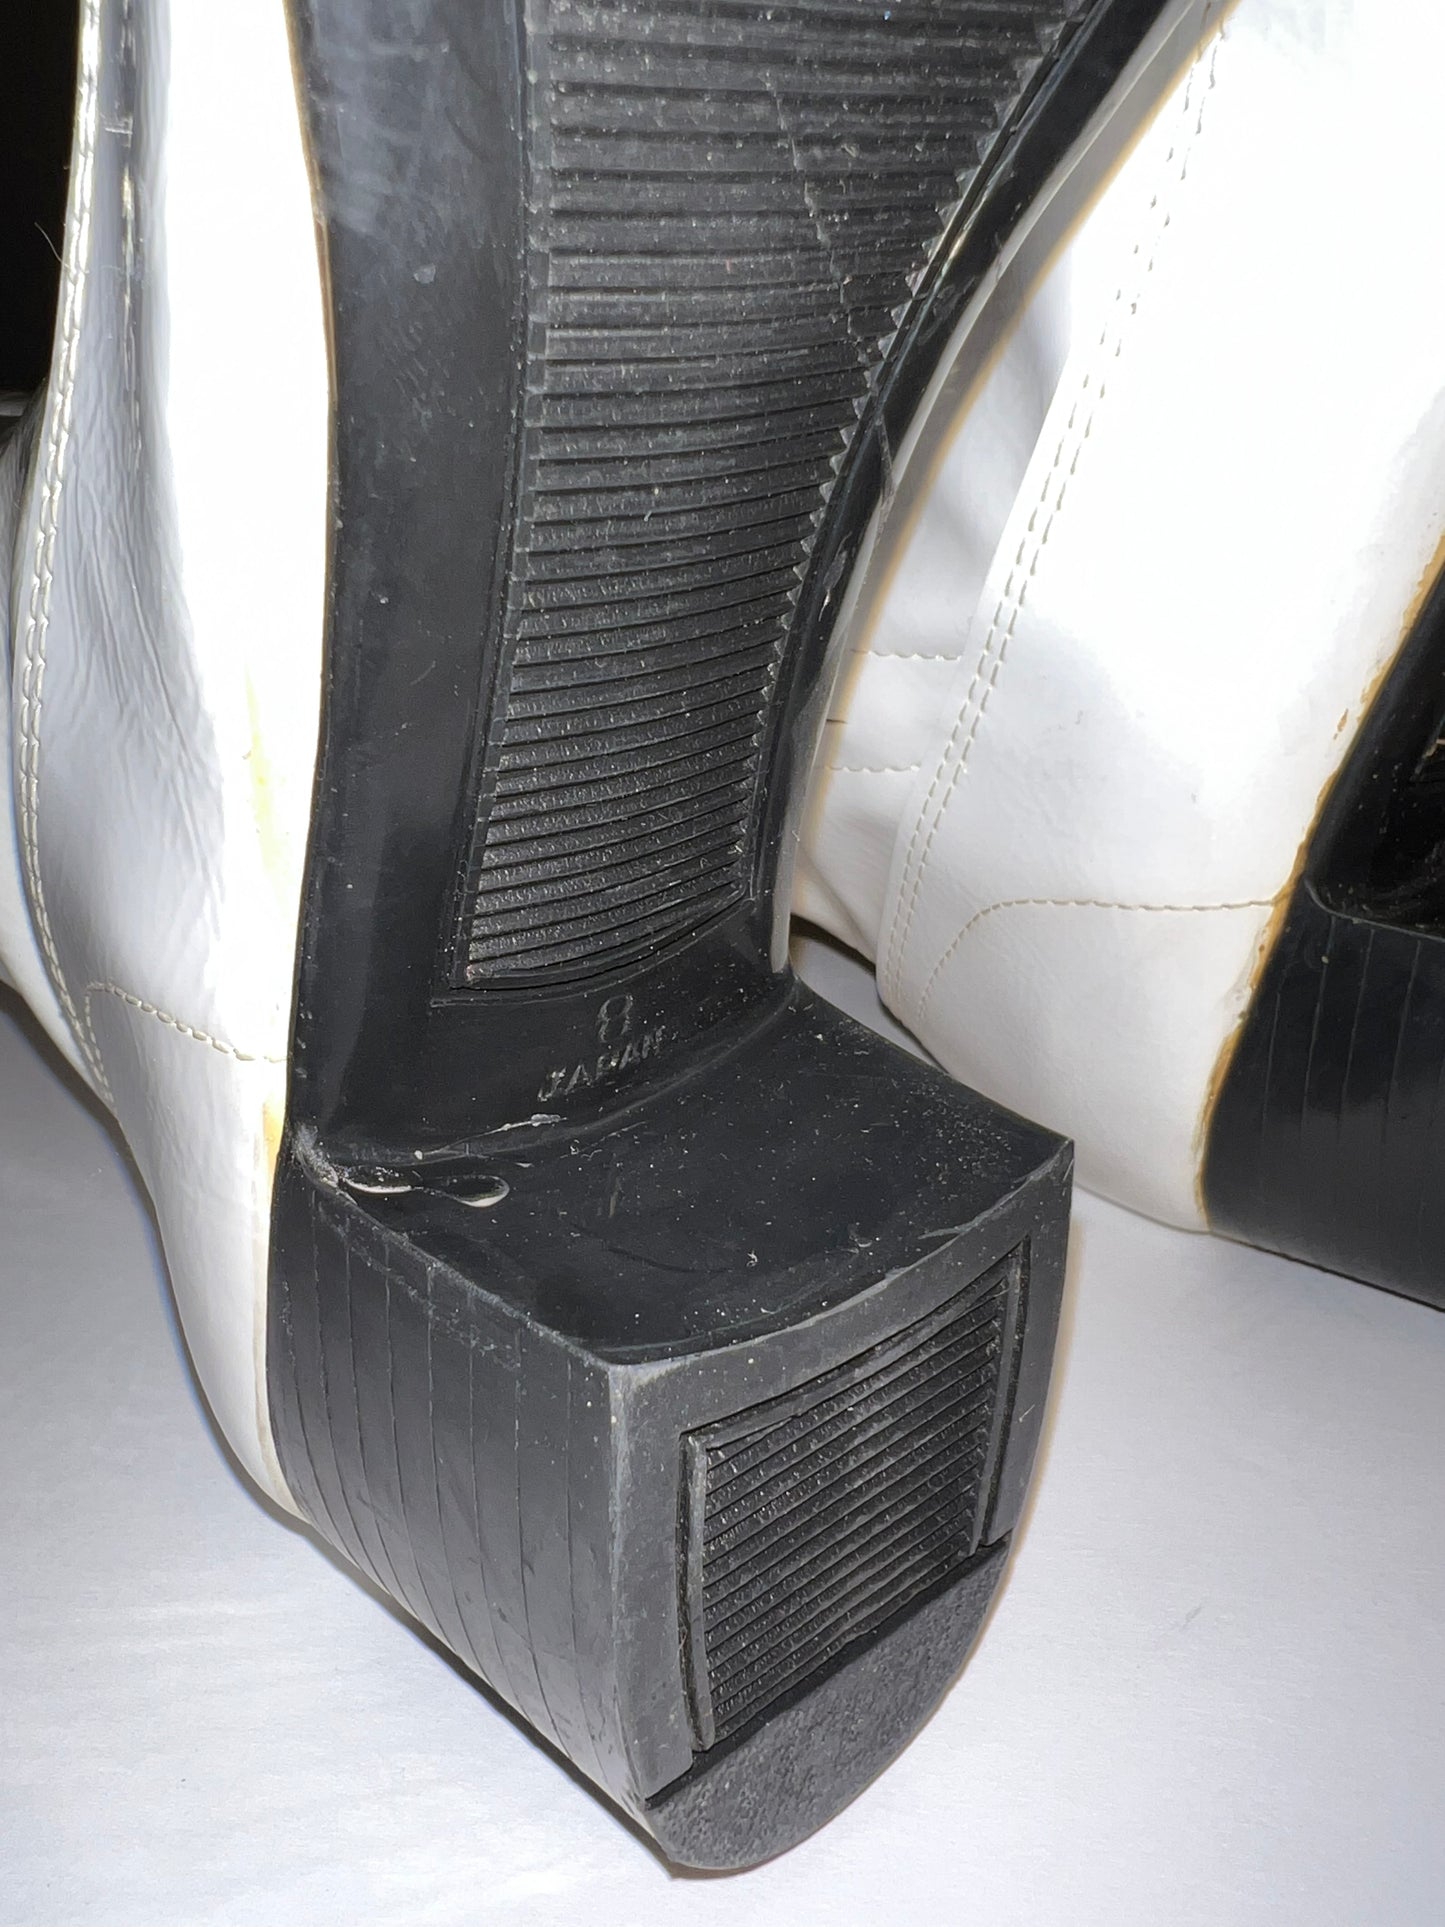 Vintage Patent White Go-Go Boots